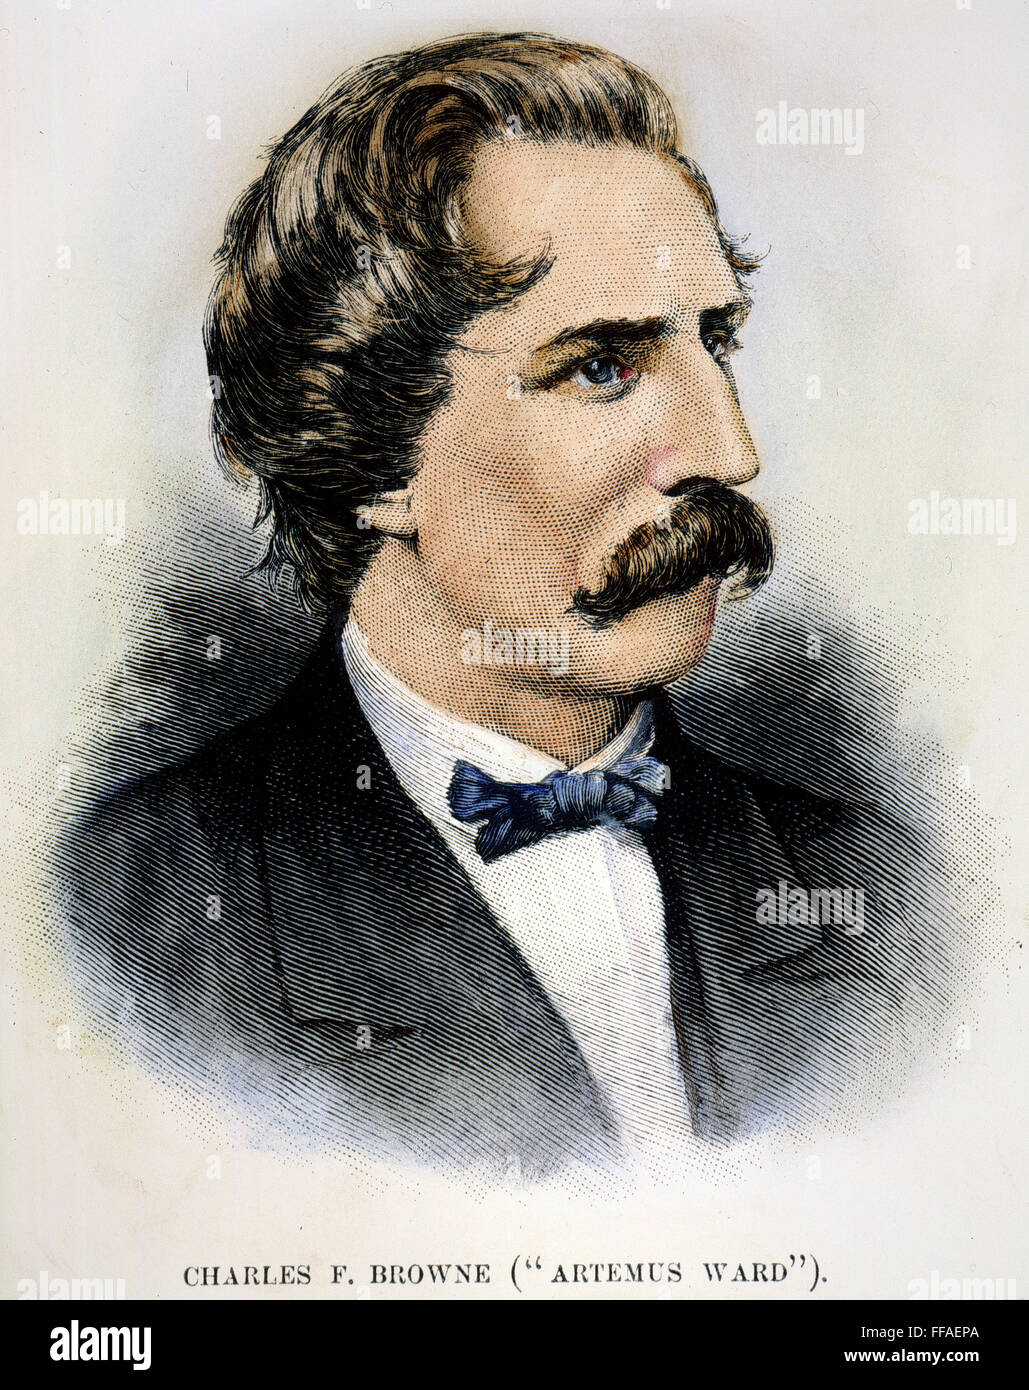 ARTEMUS WARD (1834-1867). /nPseudonym of Charles Farrar Browne, American humorist: wood engraving, American, 1867. Stock Photo